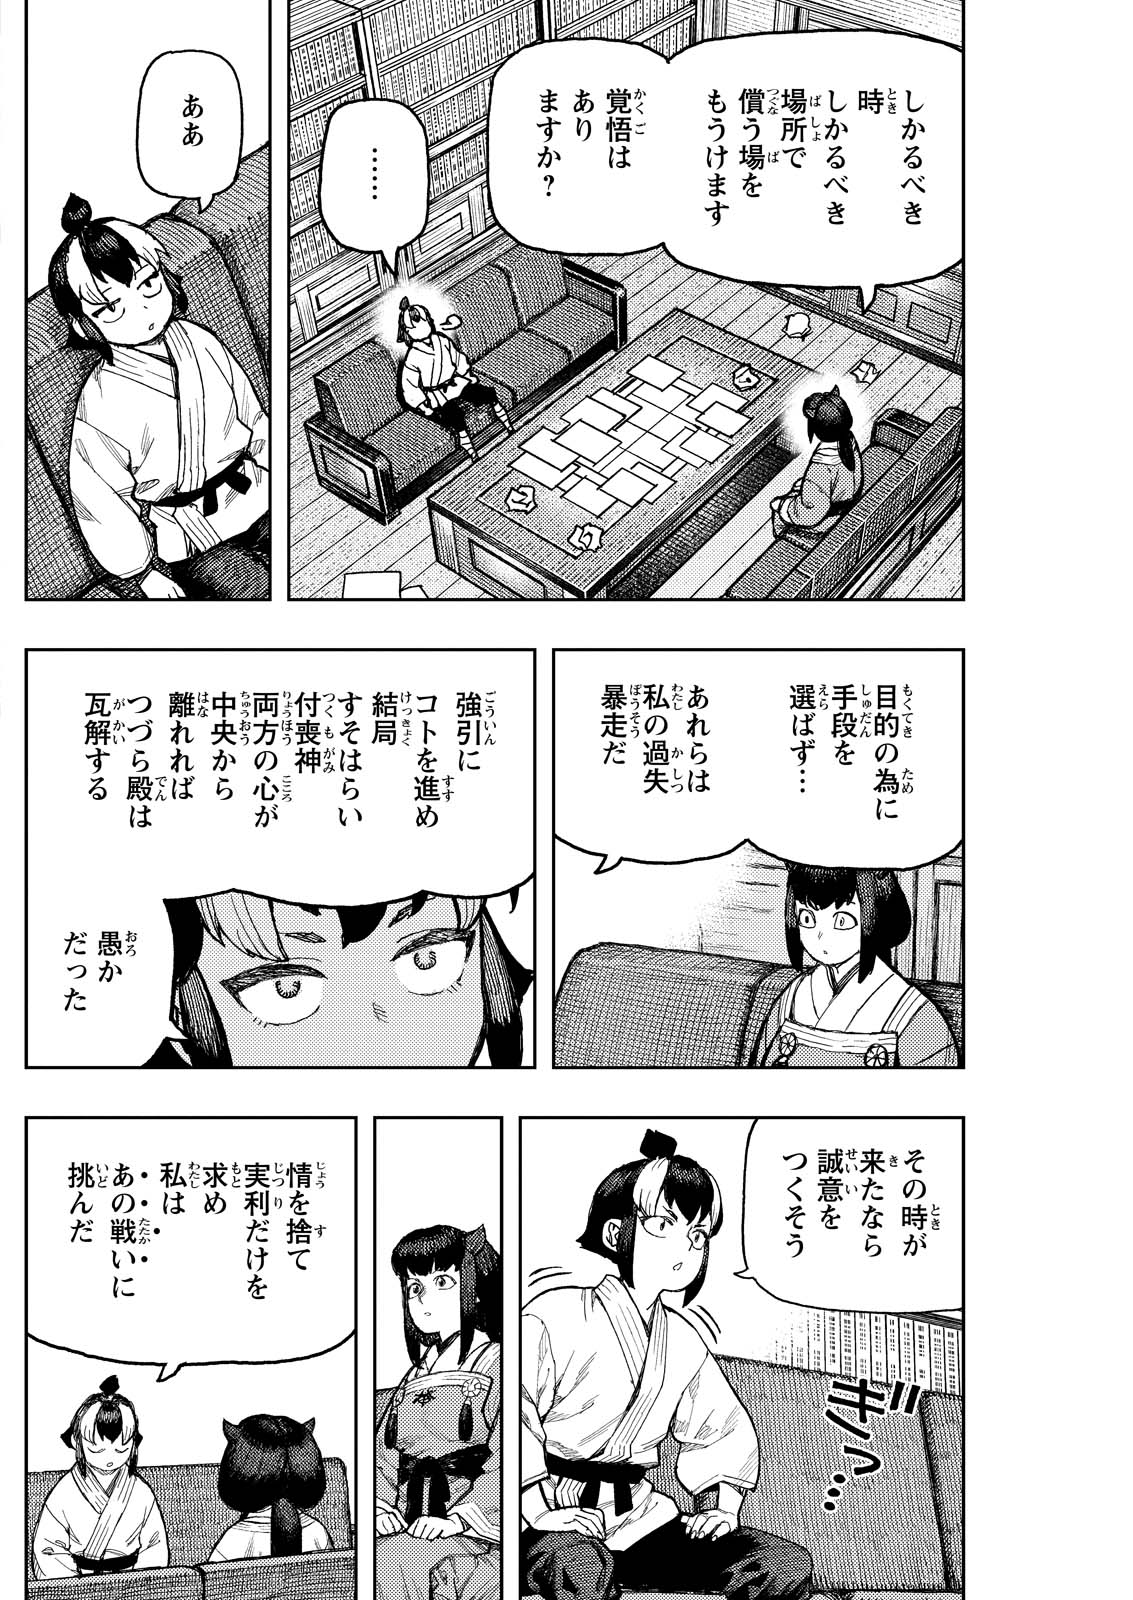 Tsugumomo - Chapter 169 - Page 4